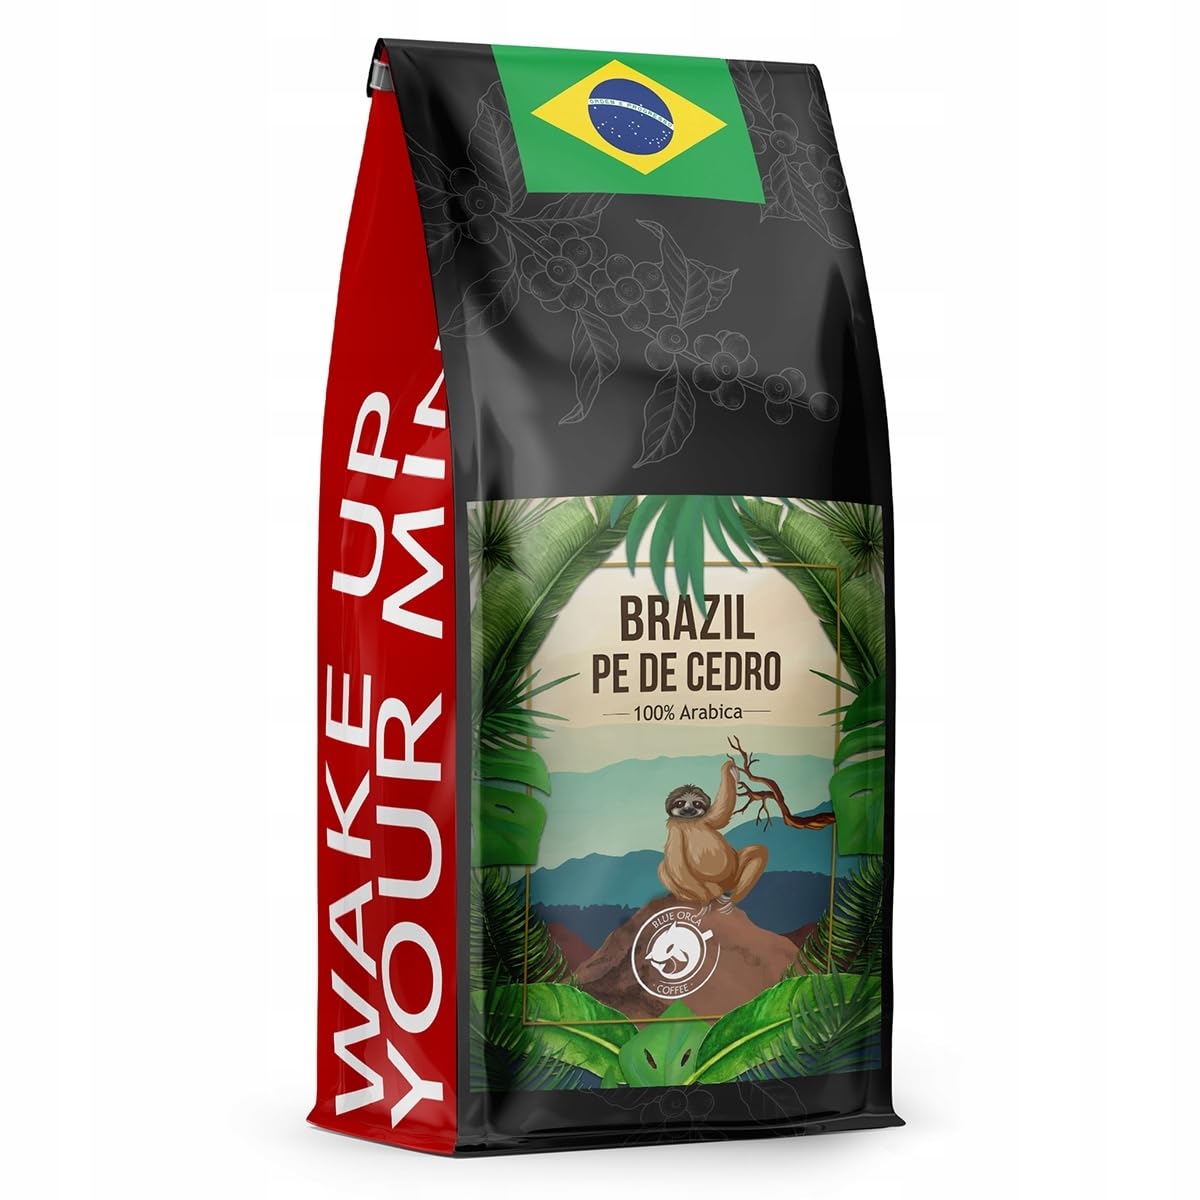 Blue Orca Coffee - BRAZIL PE DE CEDRO - Specialty Kaffeebohnen aus Brasilien - Frisch geröstet - Single Origin - SCA 85 Punkte, 1 kg
